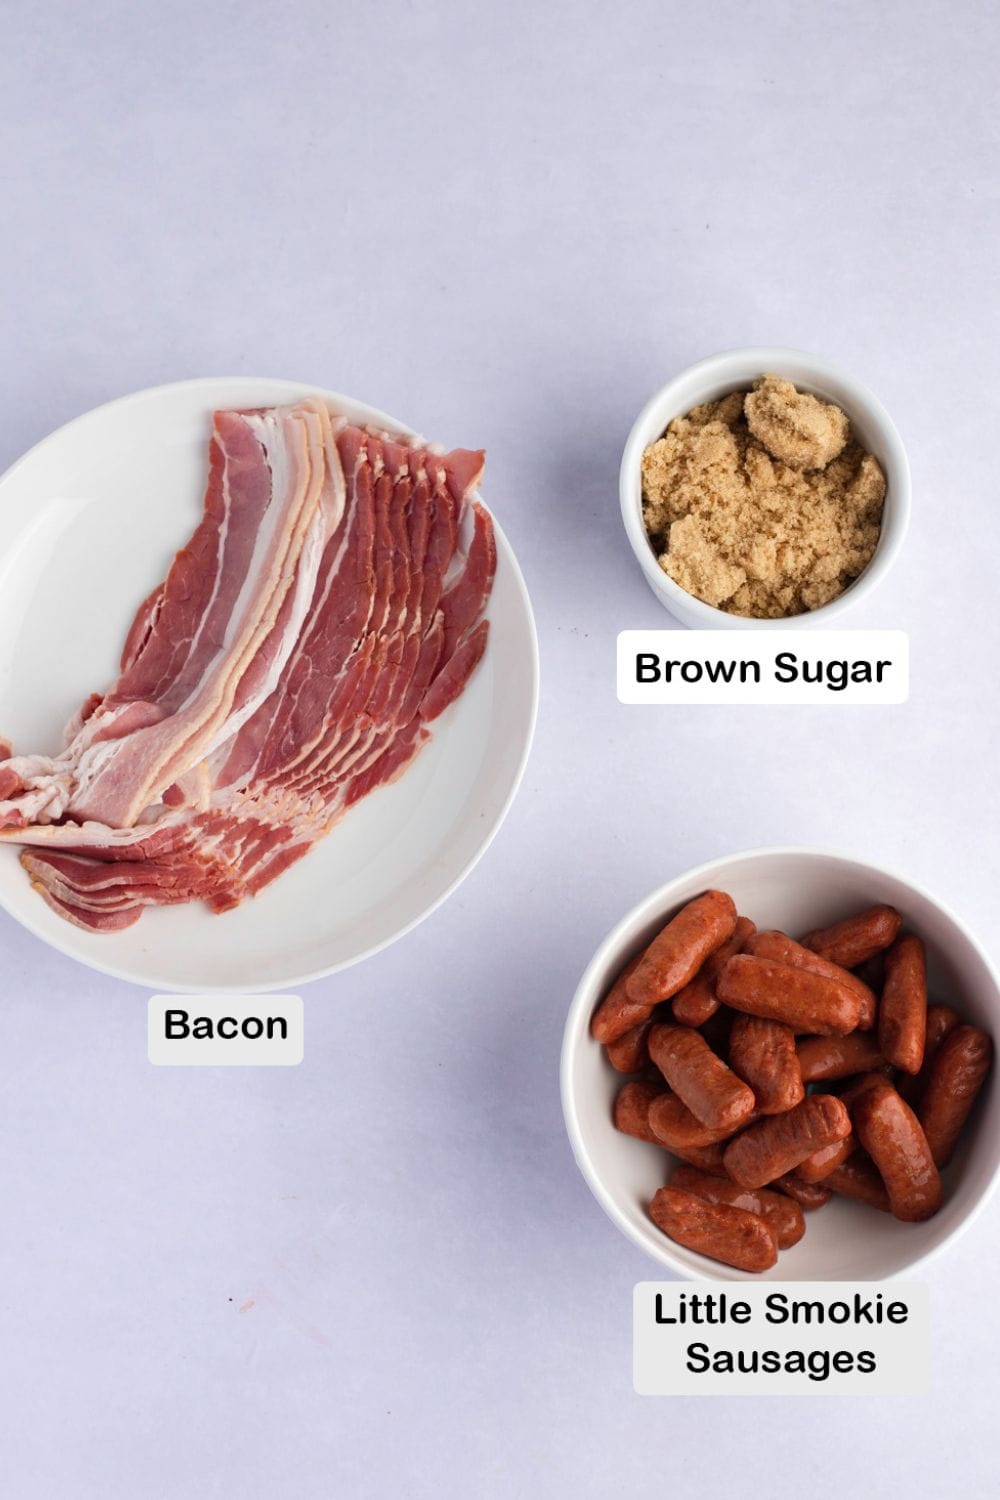 Little Smokie Ingredients - Bacon, Little Smokie Sausages and Brown Sugar